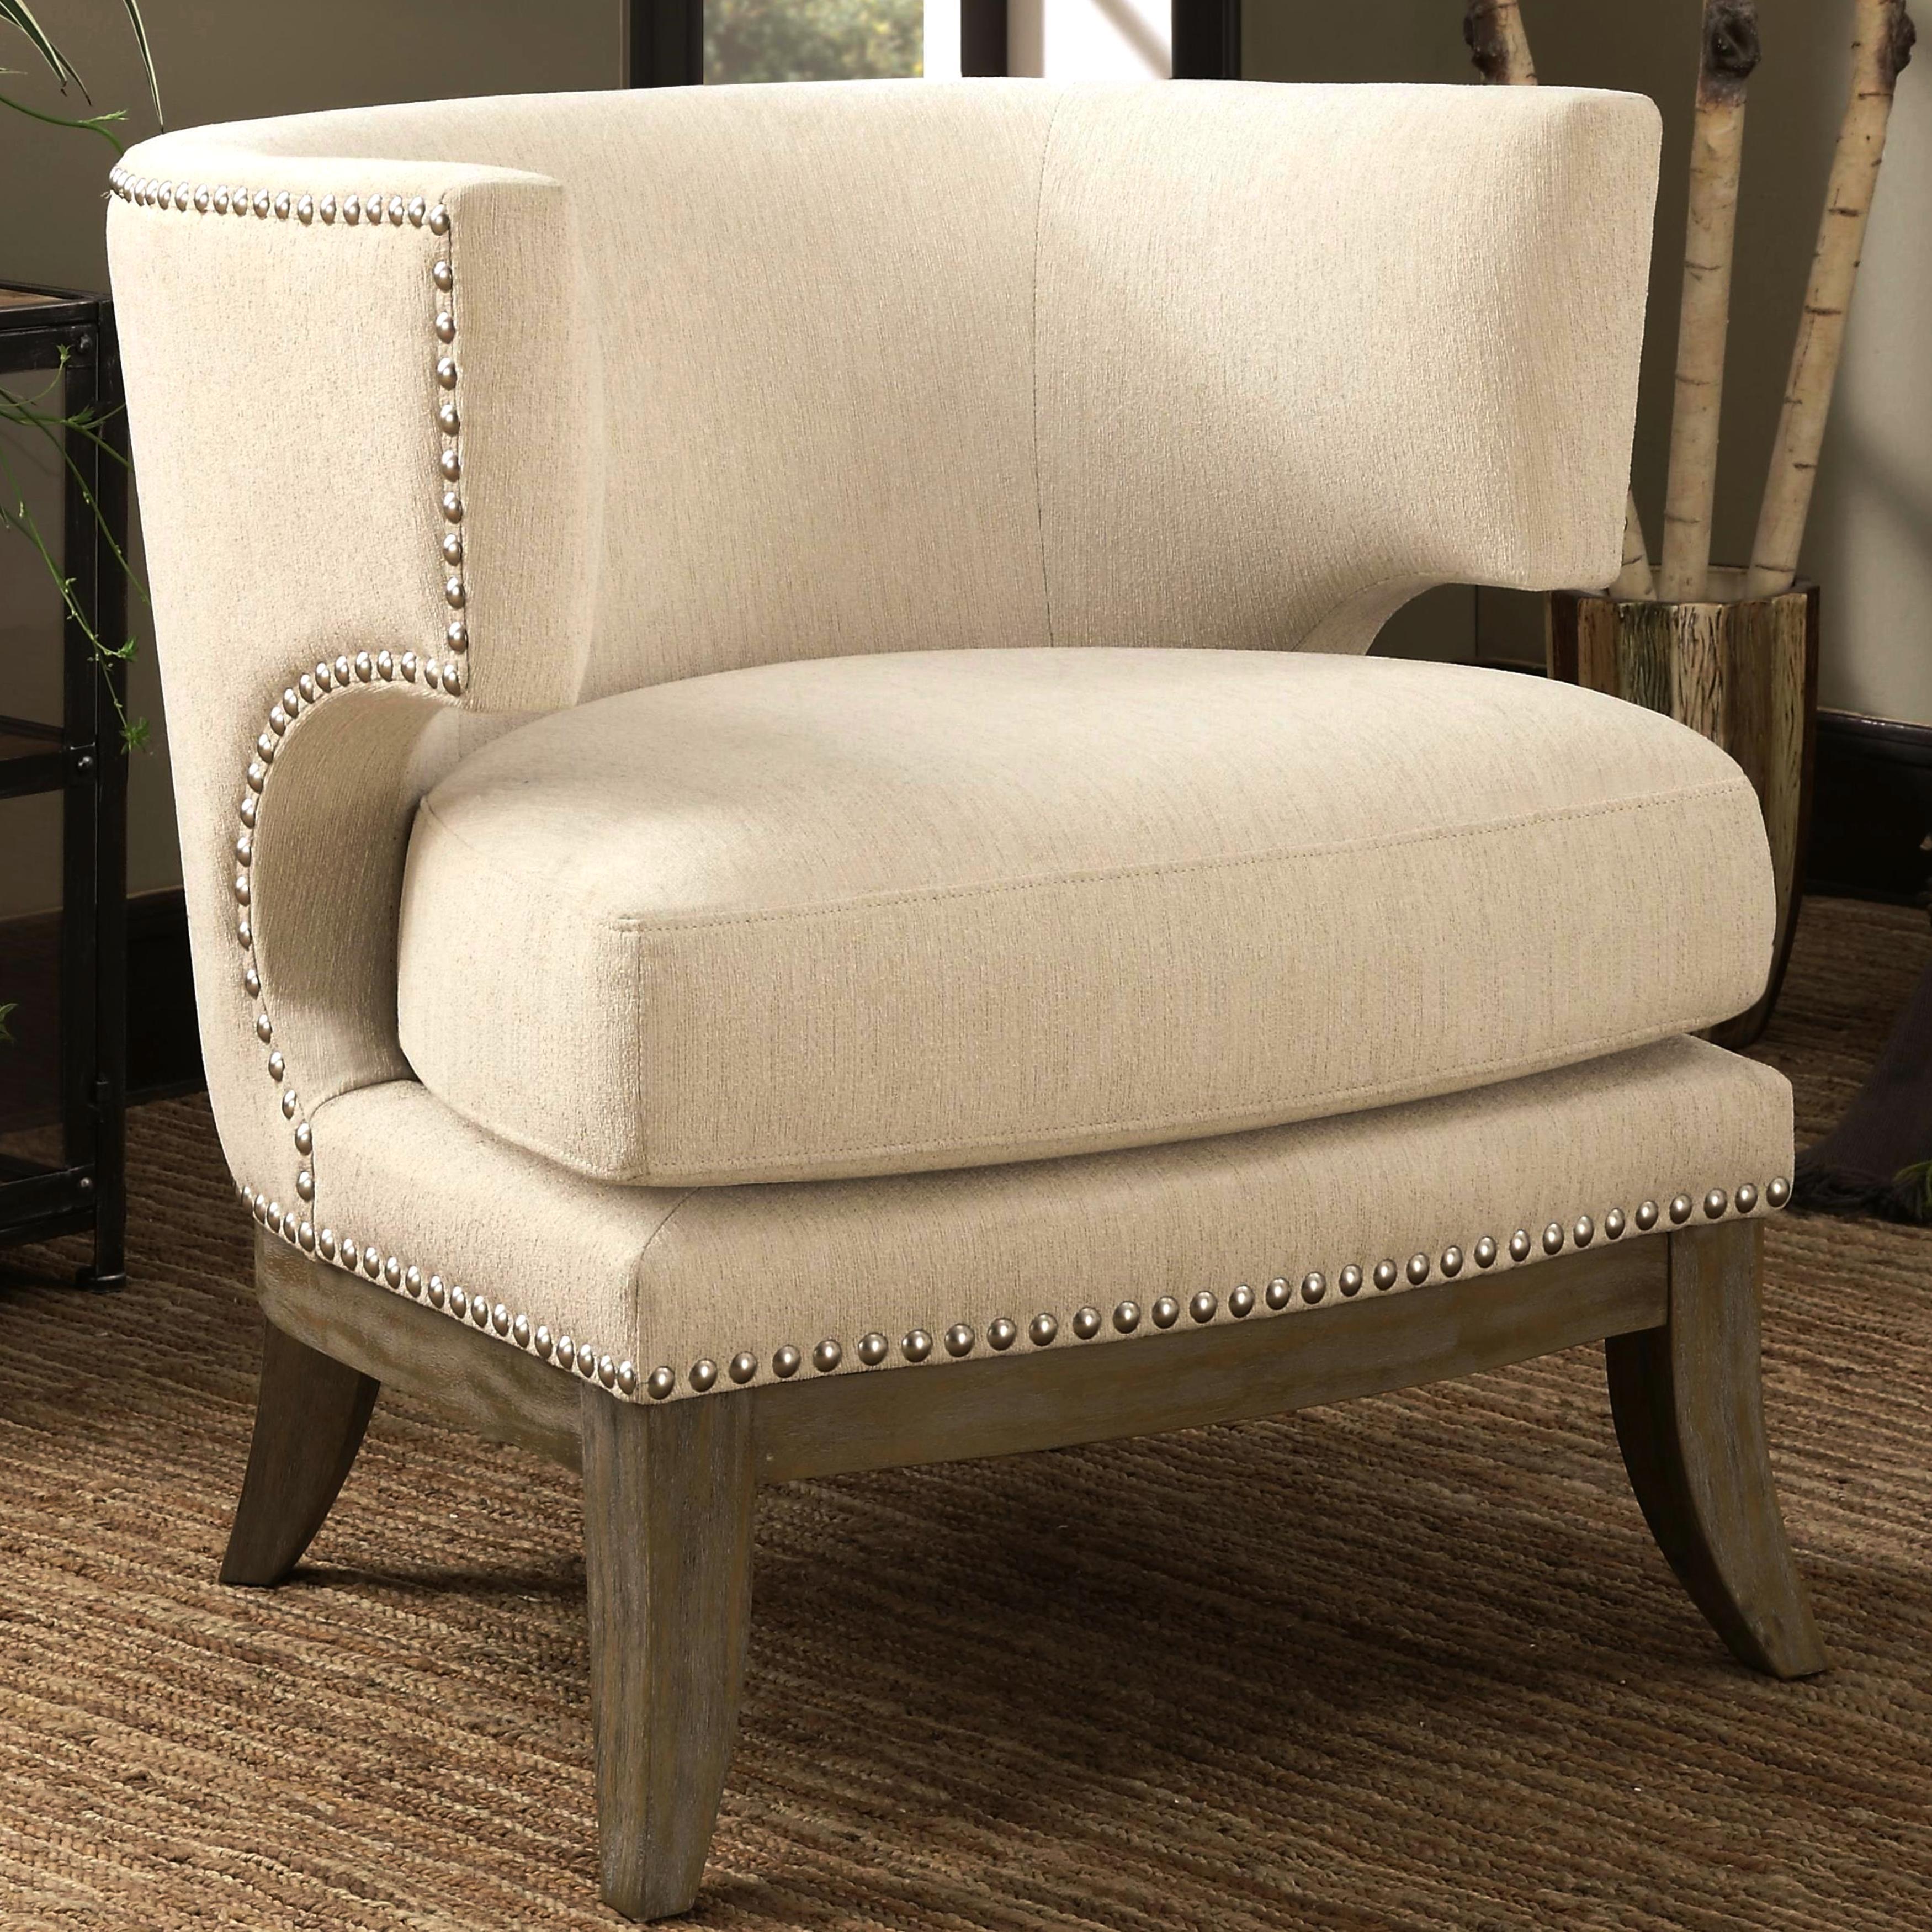 Luxenberg Mid Century Modern Barrel Back Design Soft Cream White Accent Chair With Nailhead Trim 8b62ce59 0eba 4c89 97e7 F0939d3f4e32 